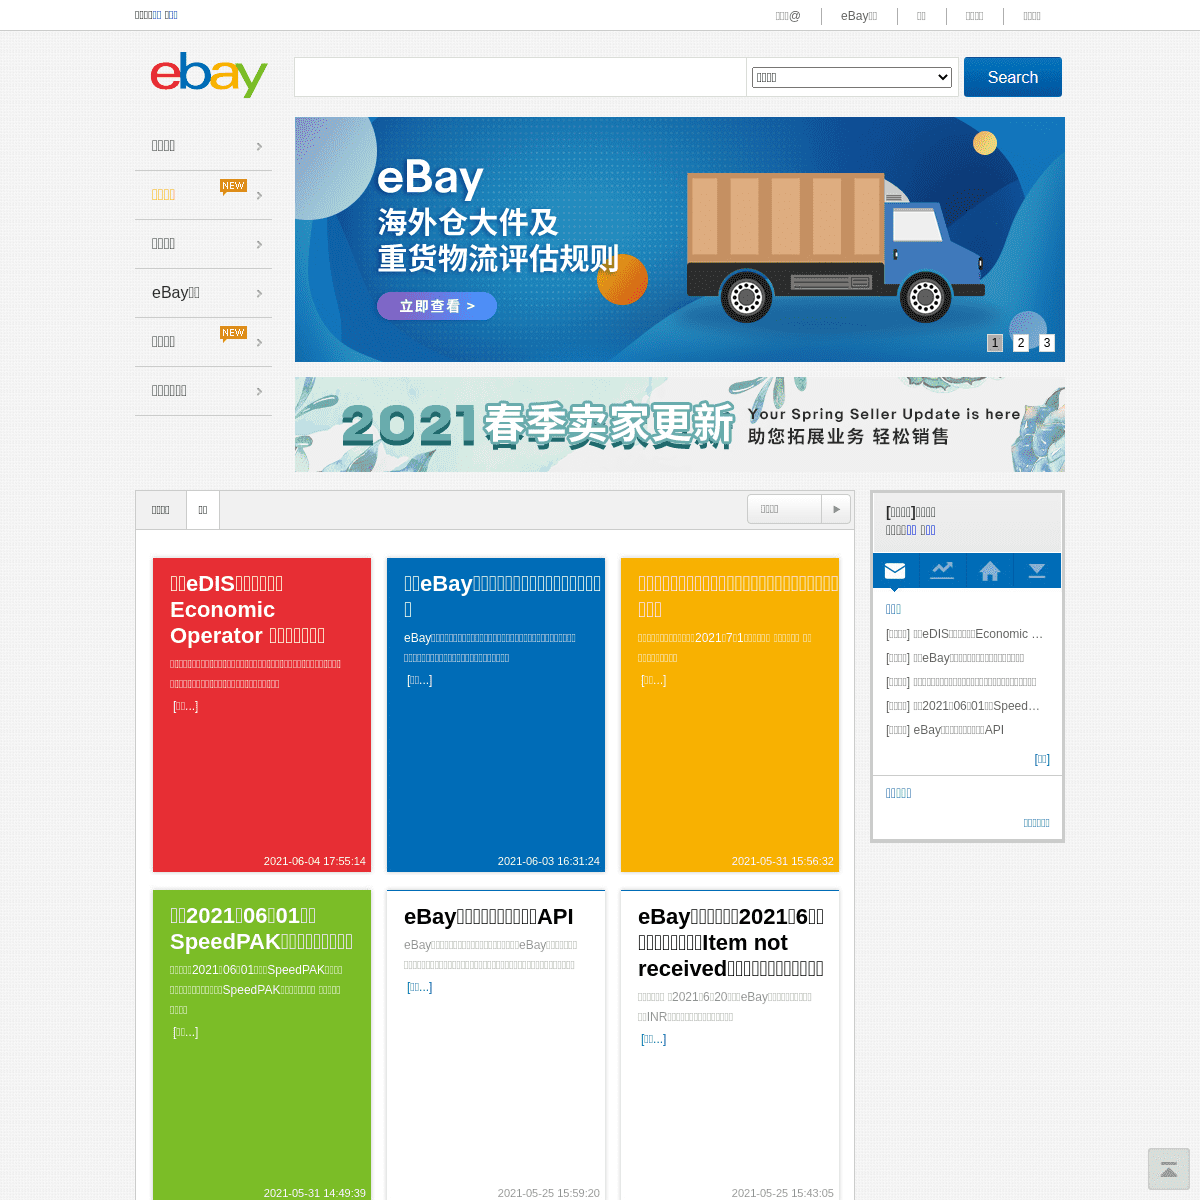 A complete backup of https://ebay.cn